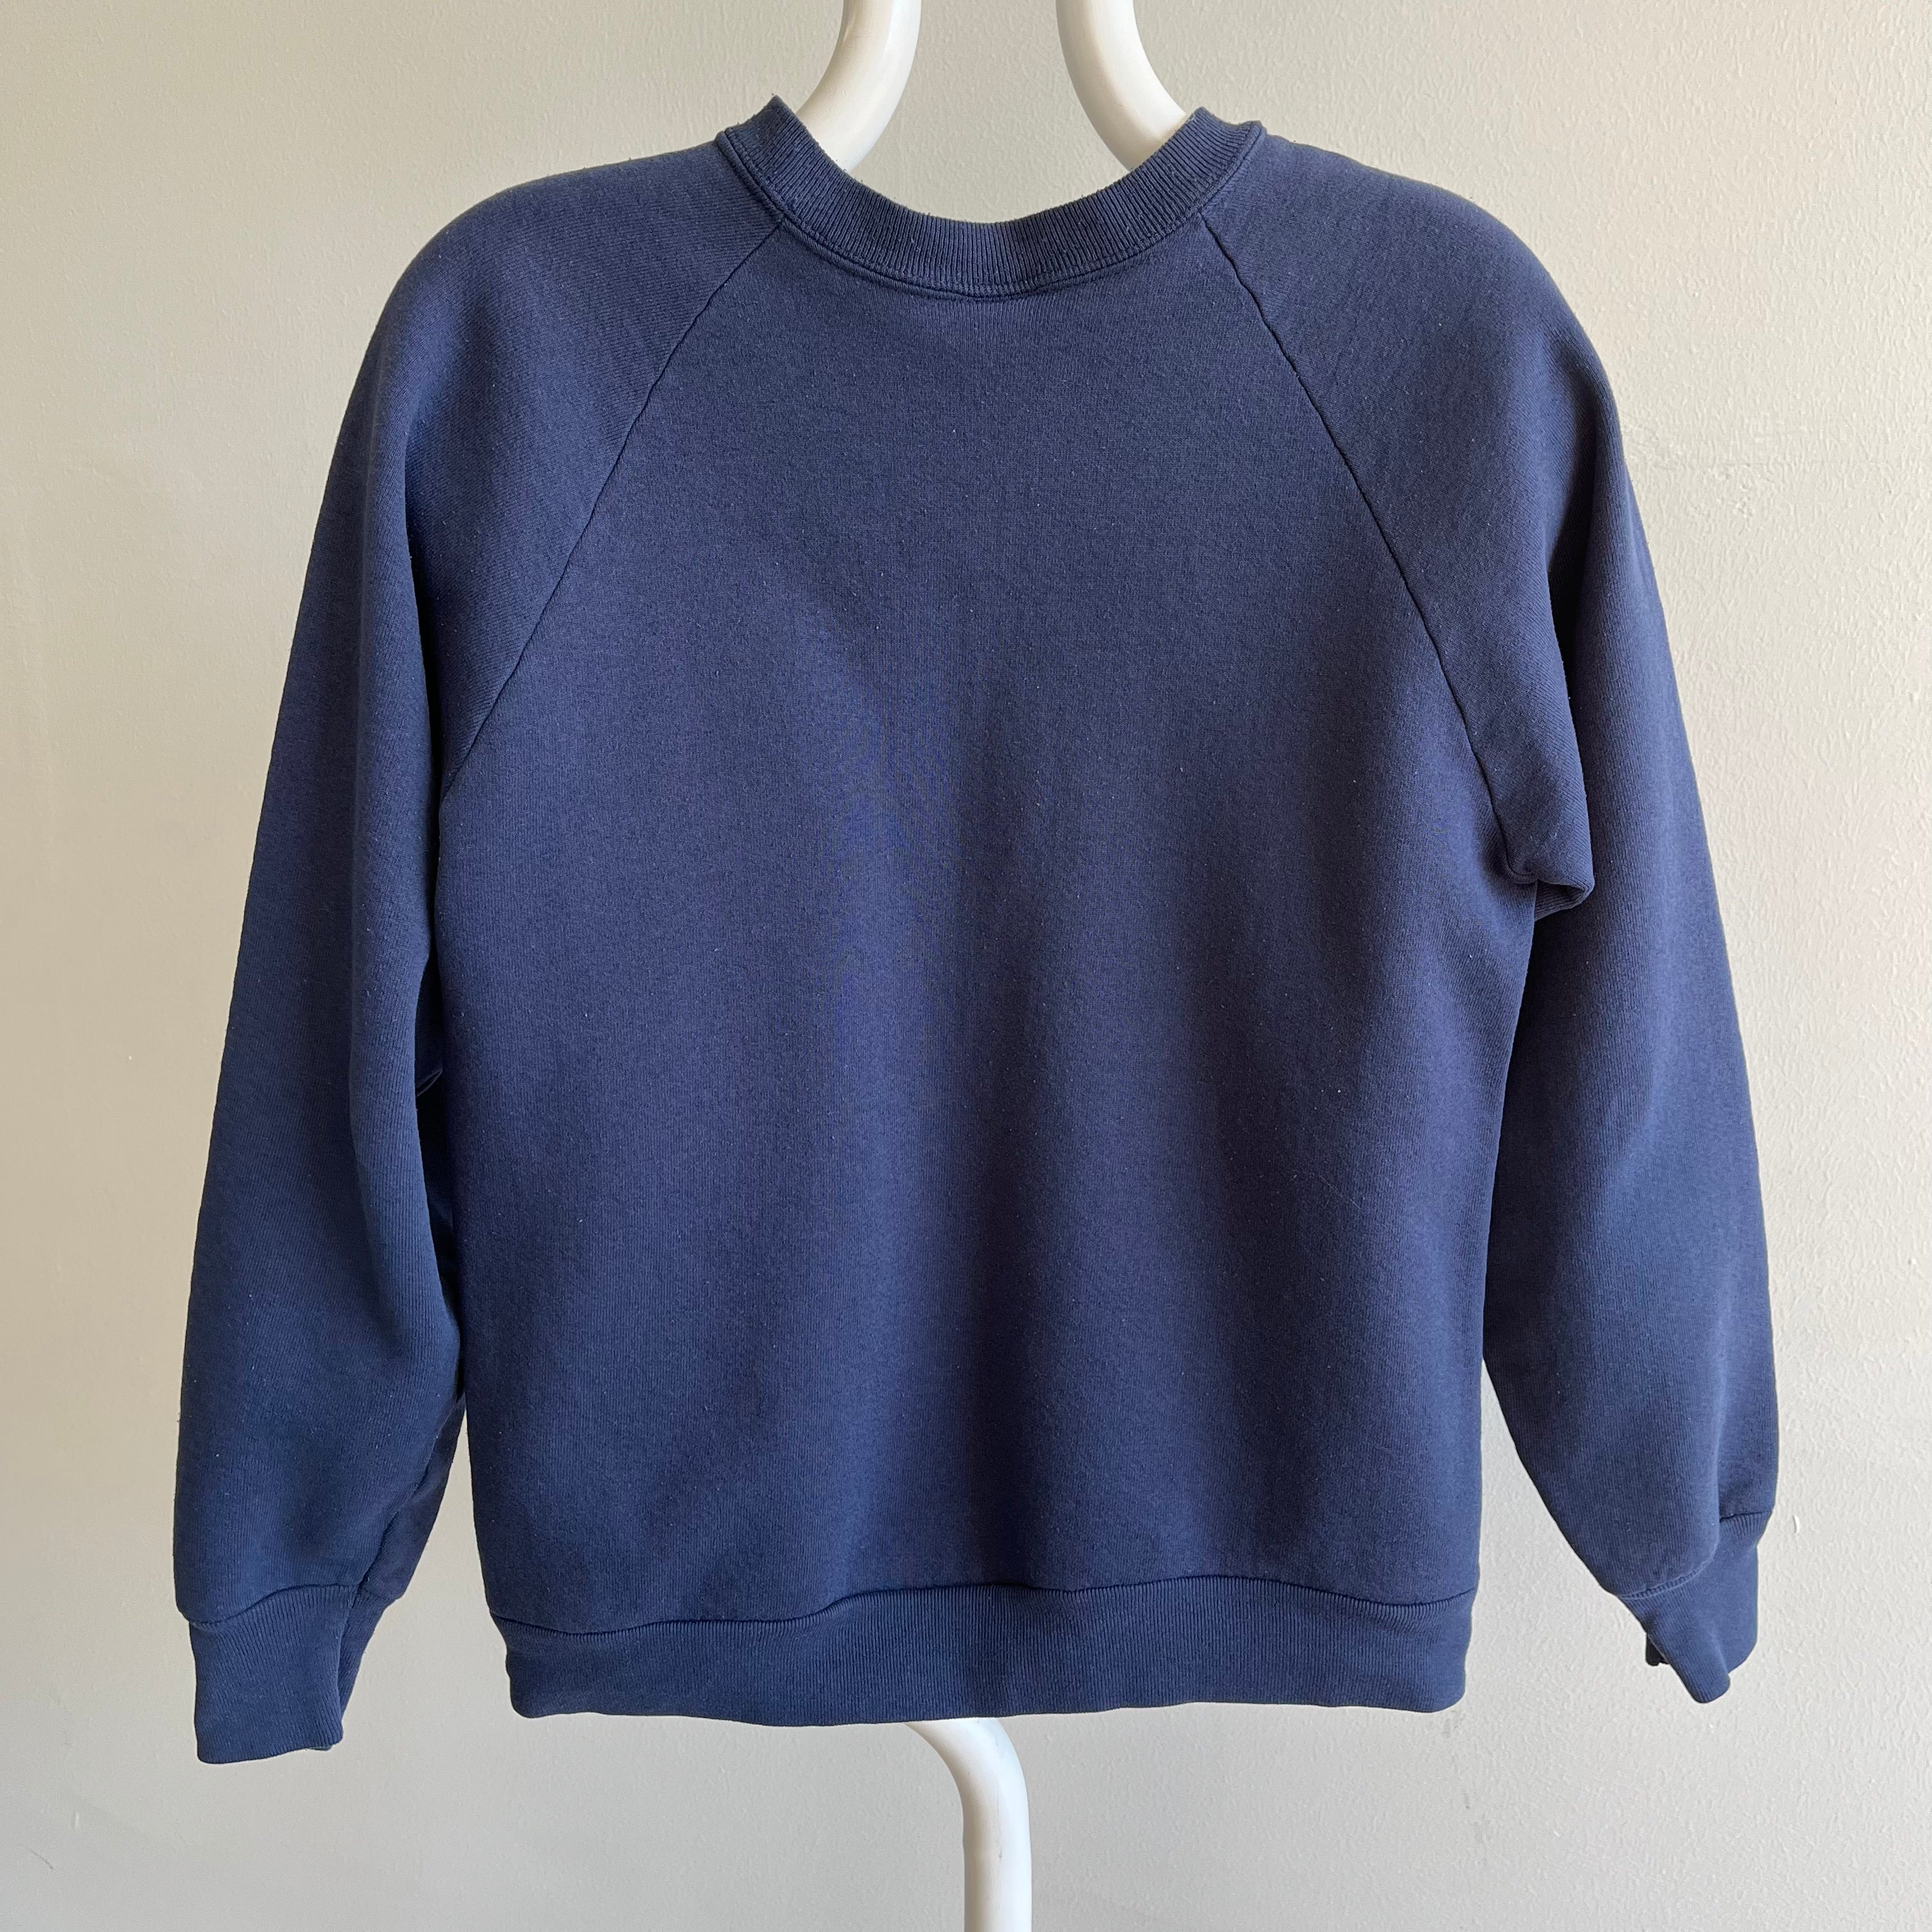 1980s Georgia Tech Smaller Sweatshirt